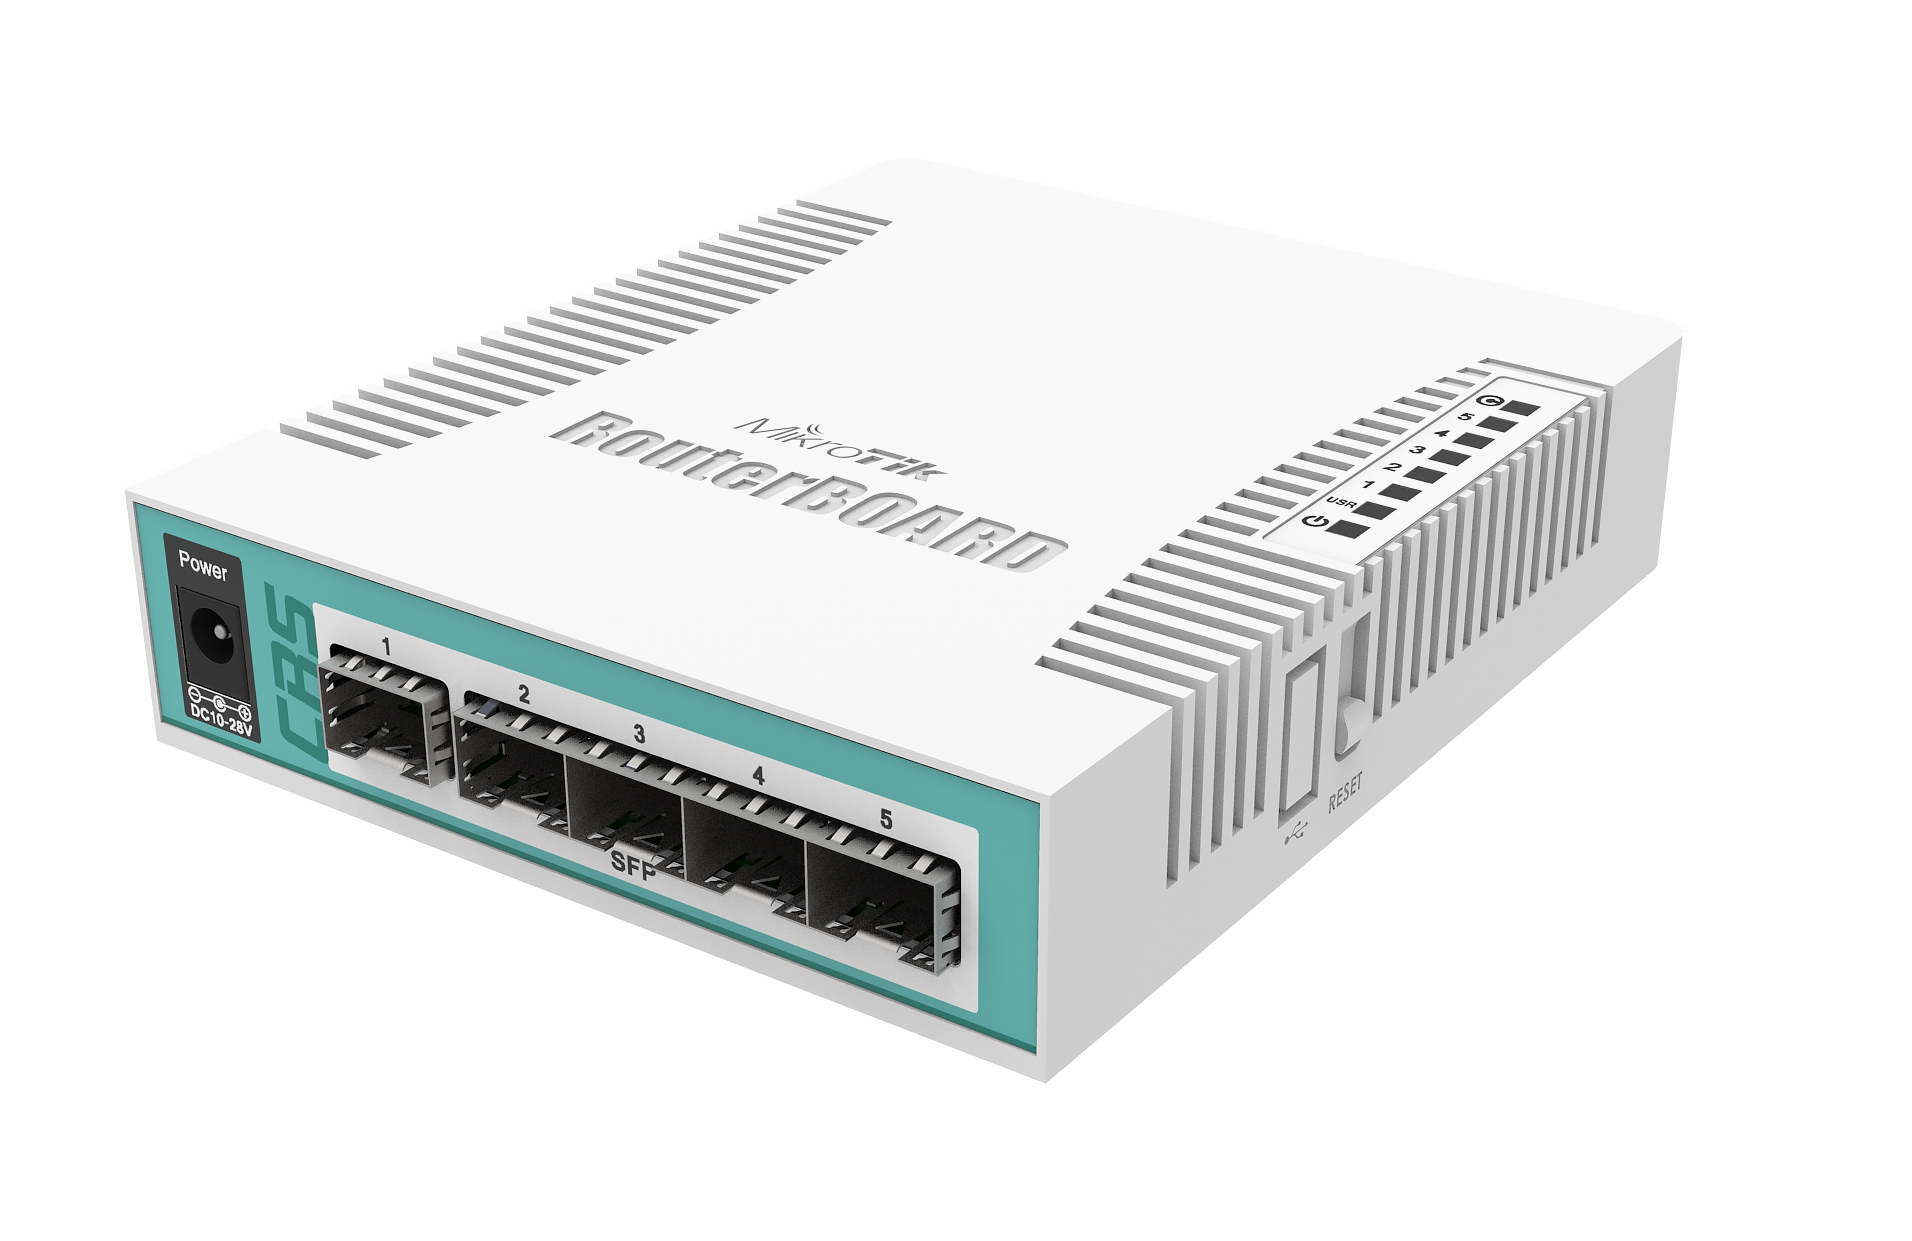 Маршрутизатор Mikrotik 5port SFP crs106-1c-5s. Коммутатор Mikrotik crs106-1c-5s. Коммутатор cloud Router Switch Mikrotik crs106-1c-5s (ROUTEROS l5). Микротик CRS 106.